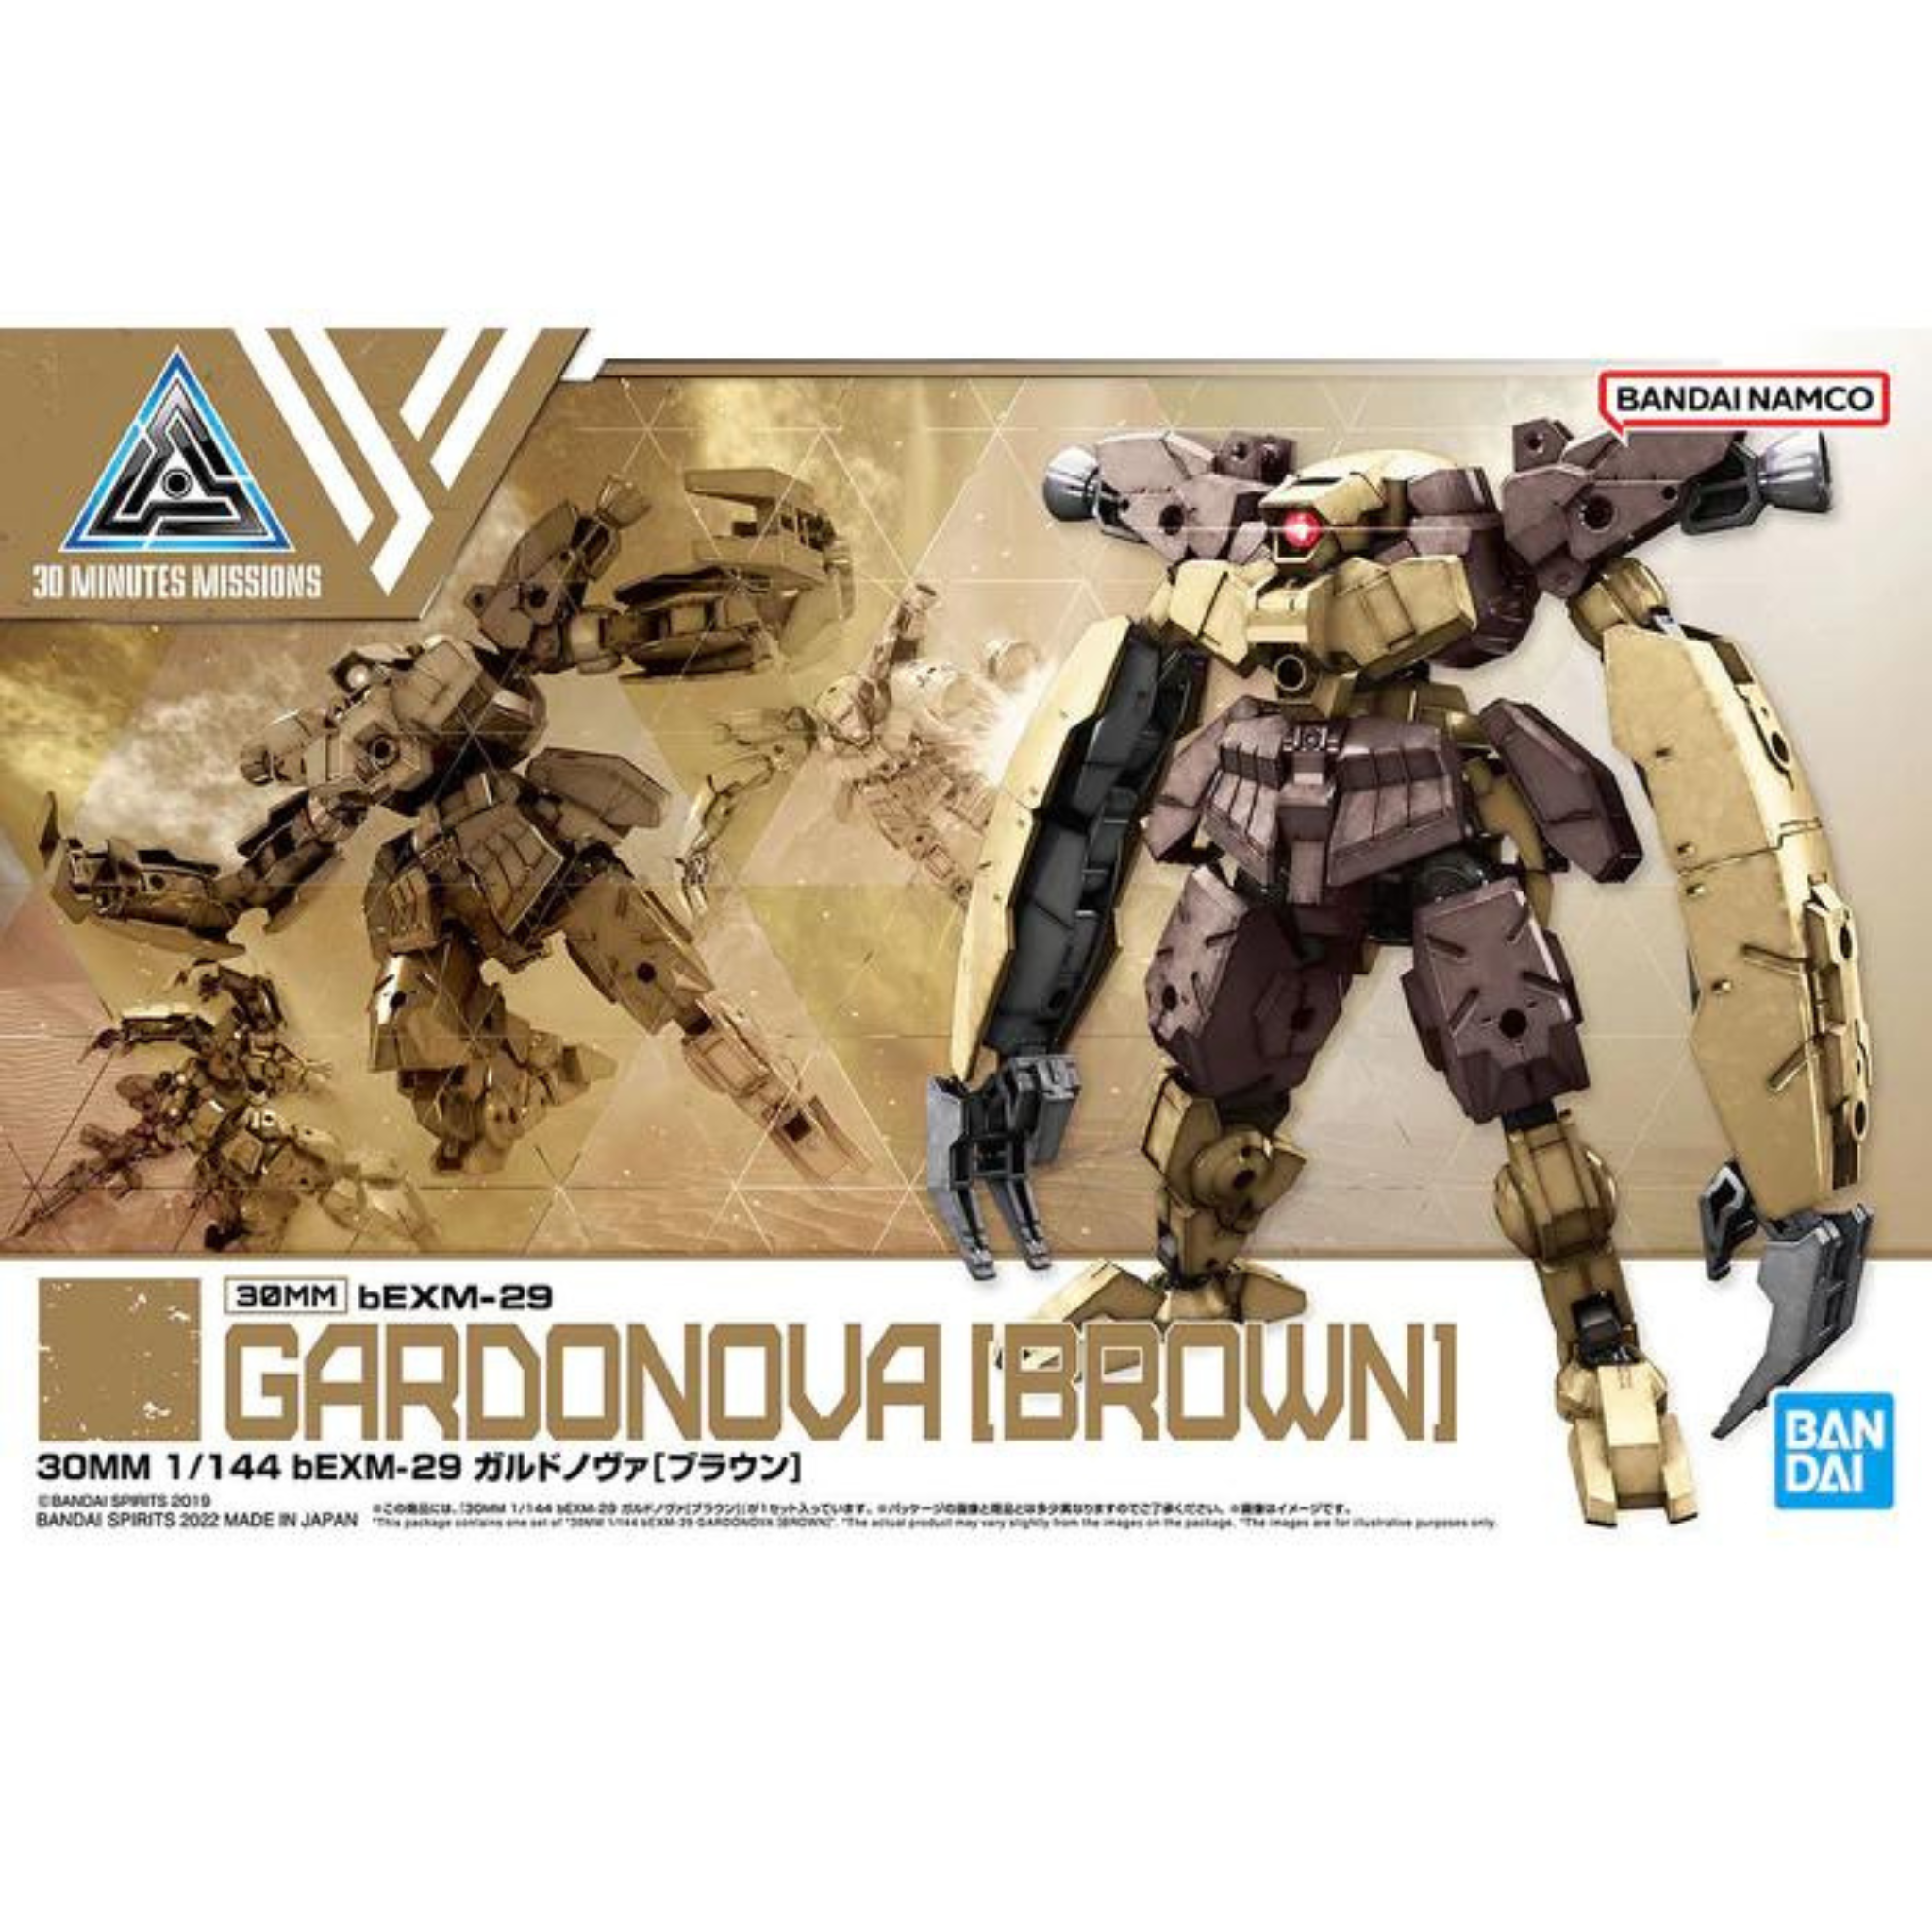 Gardonova 1/144 Brown 30 Minutes Missions Model Kit #5063387 by Bandai